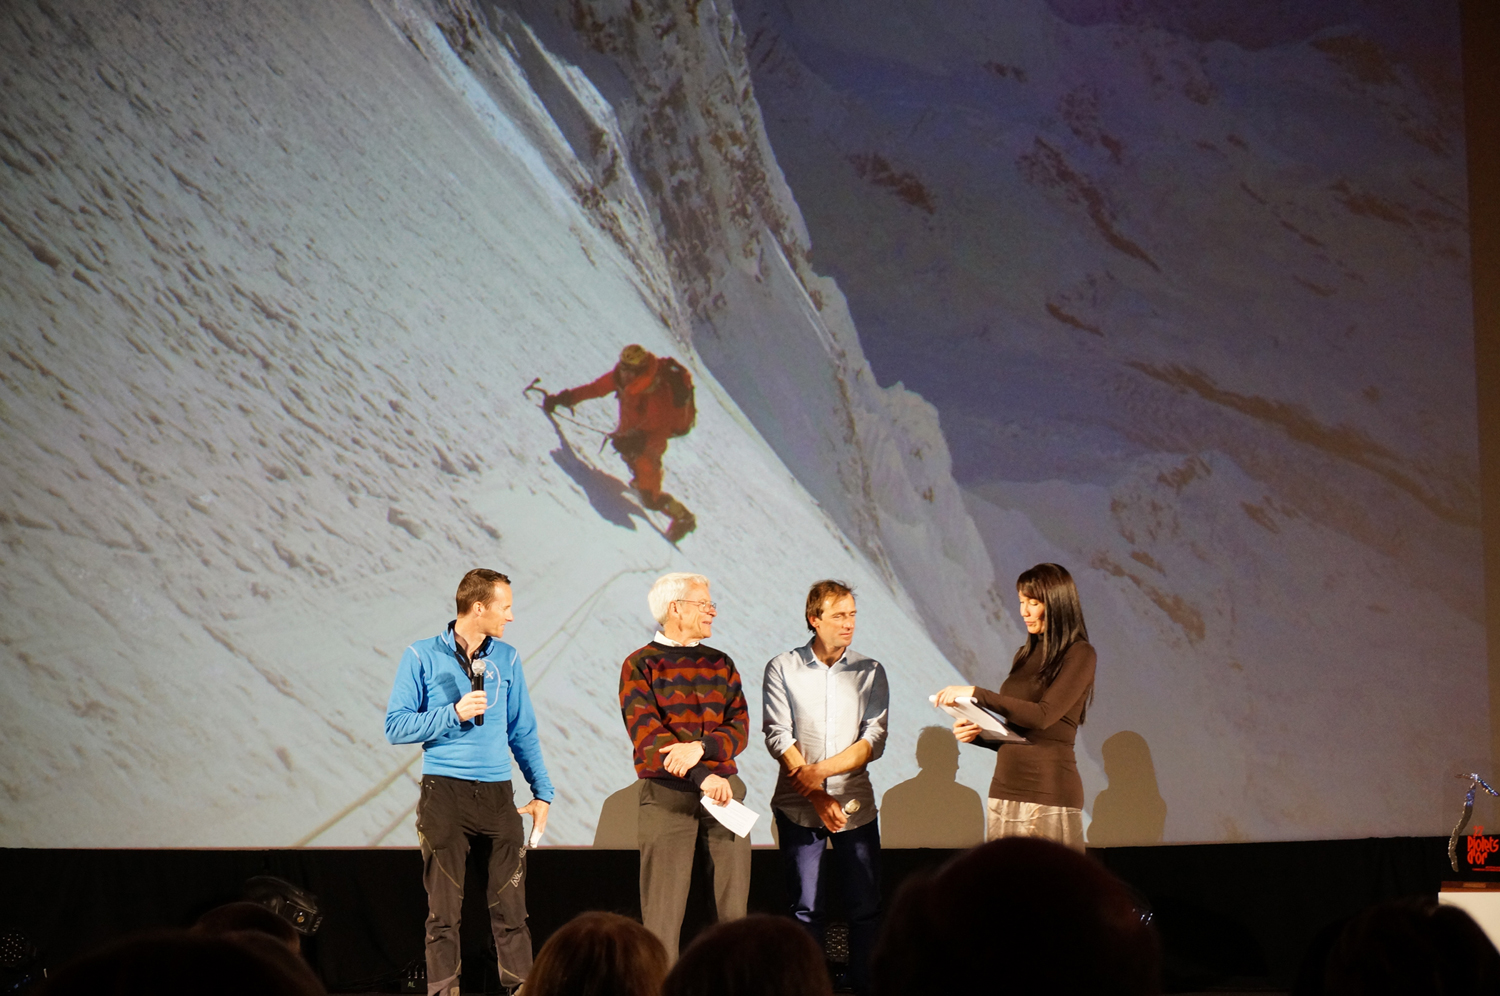 Премия "специальное упомимнание жюри" получают: Стефан Бенуа (Stephane Benoist, слева) и Янник Гразиани (Yannick Graziani, справа) за восхождения на Аннапурну